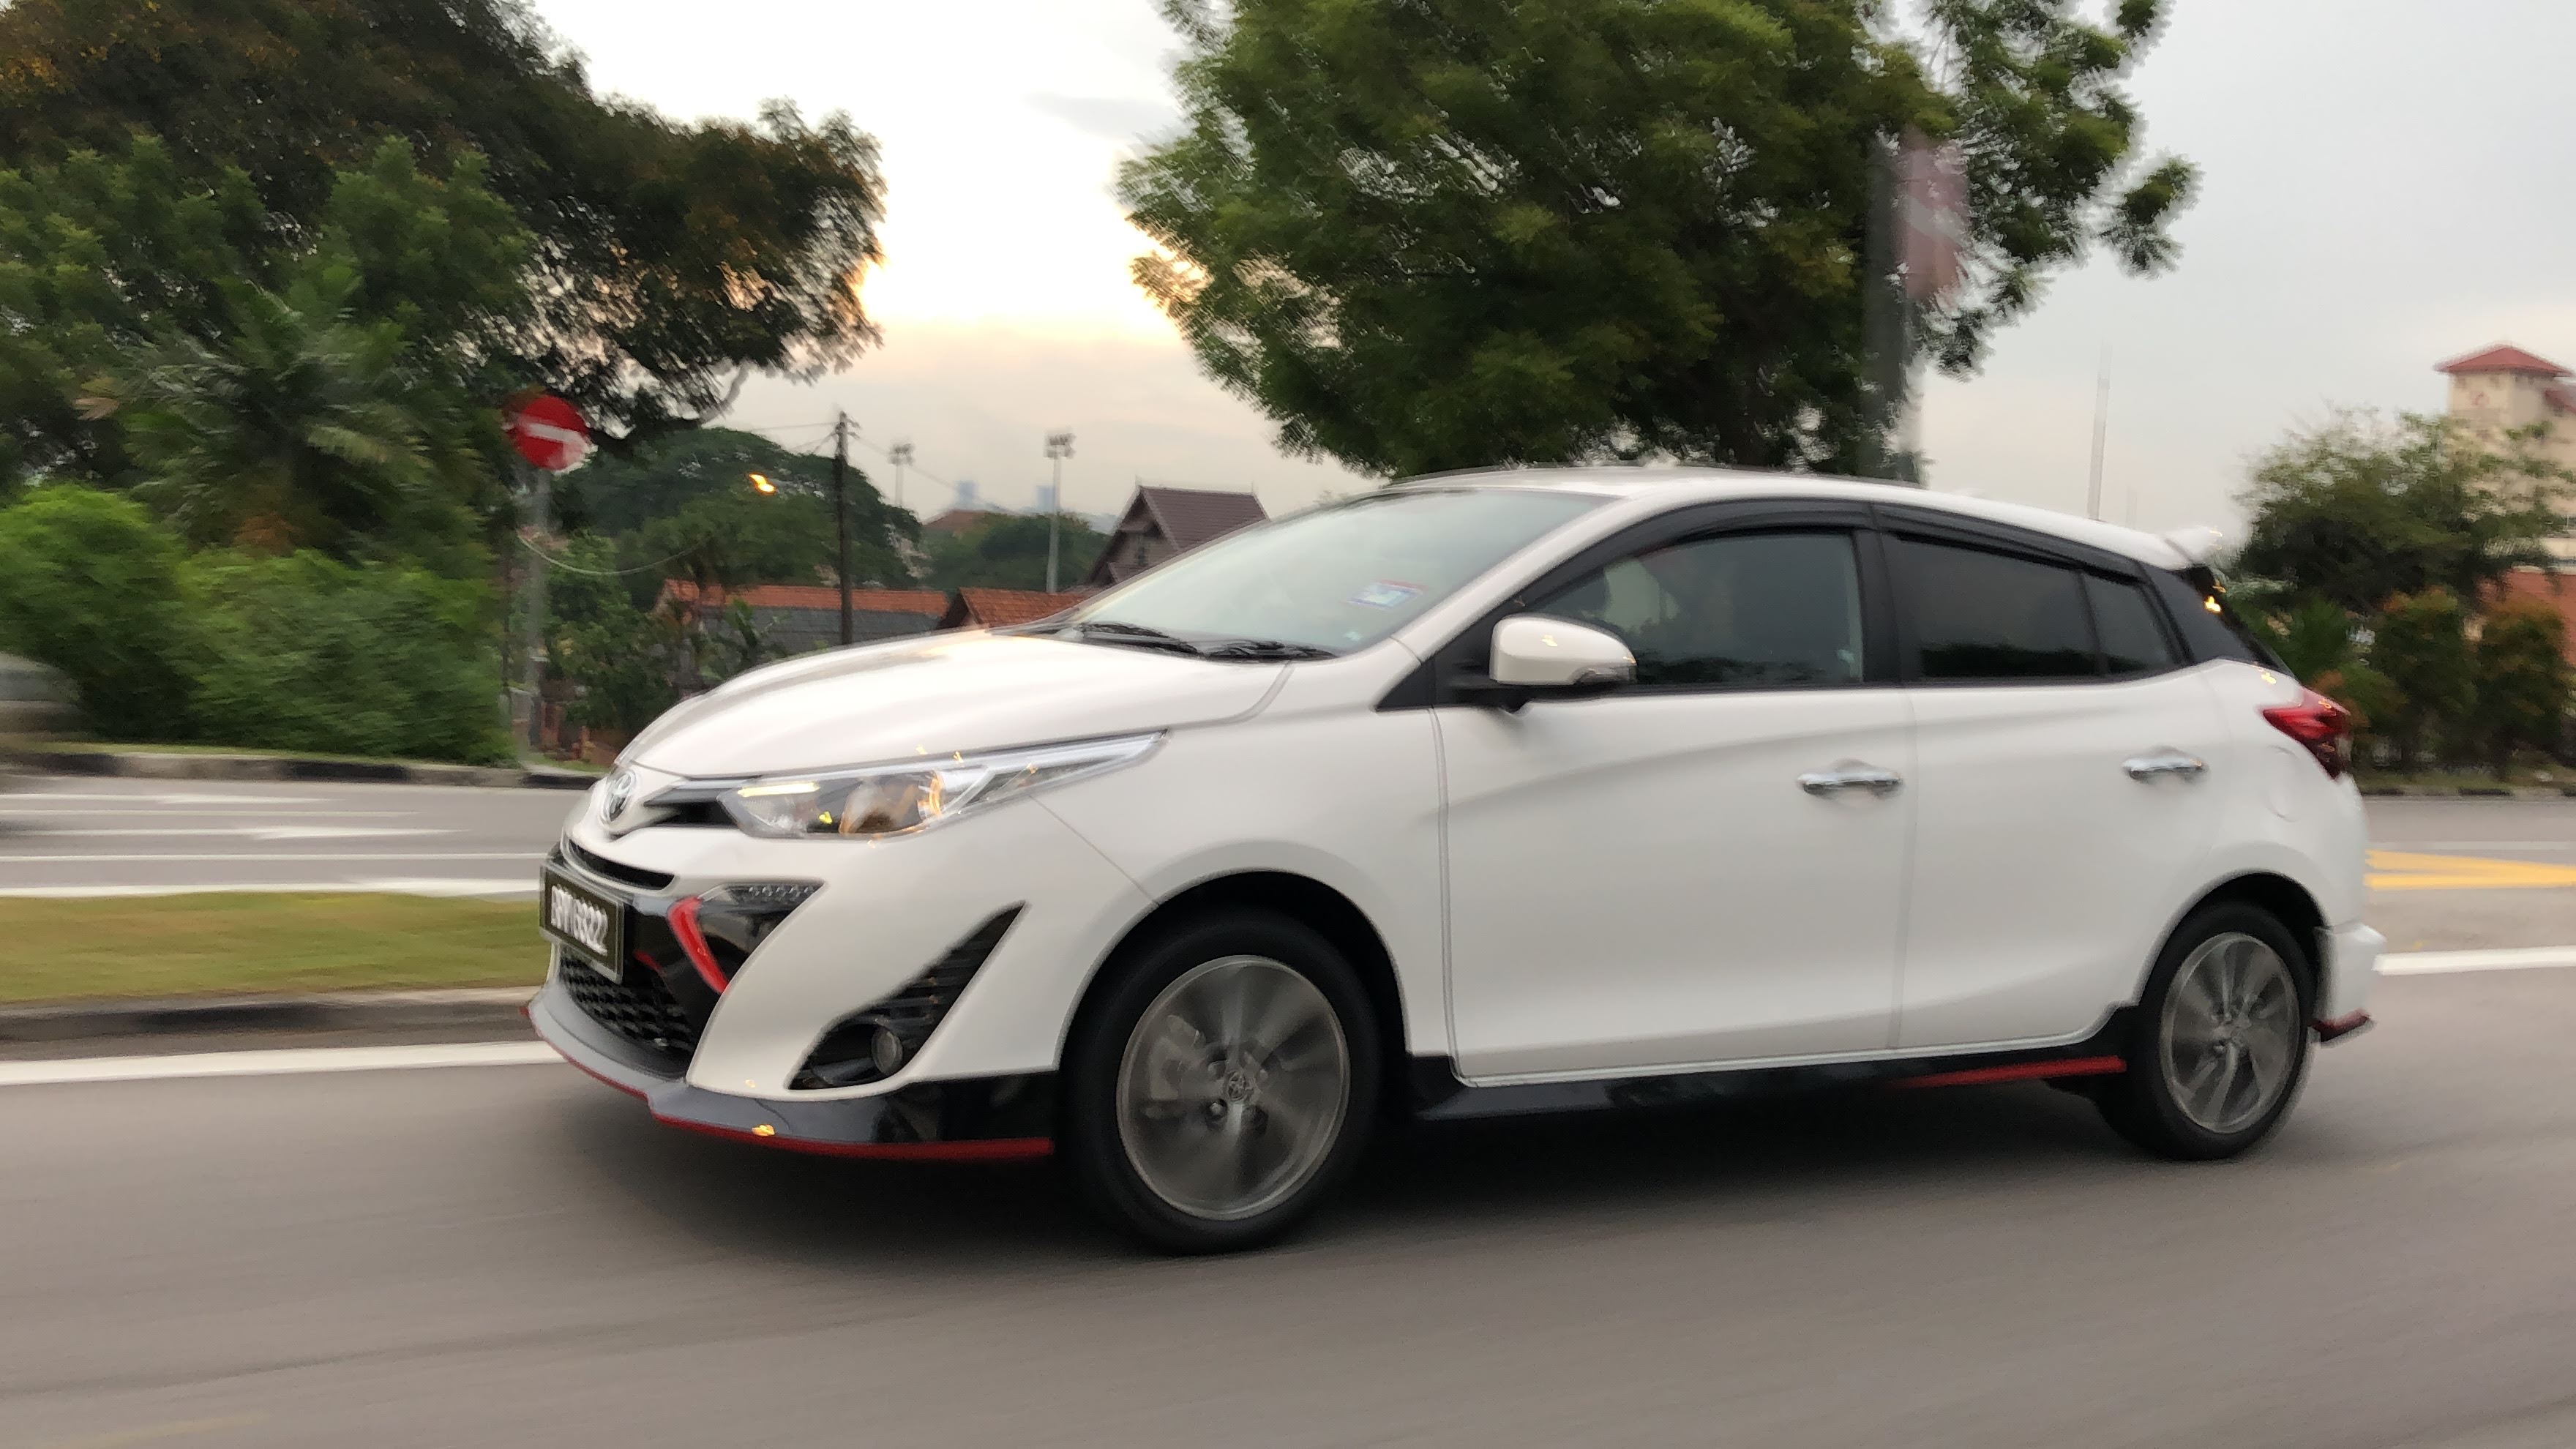 Toyota Yaris 1.5 auto test drive review - Automacha